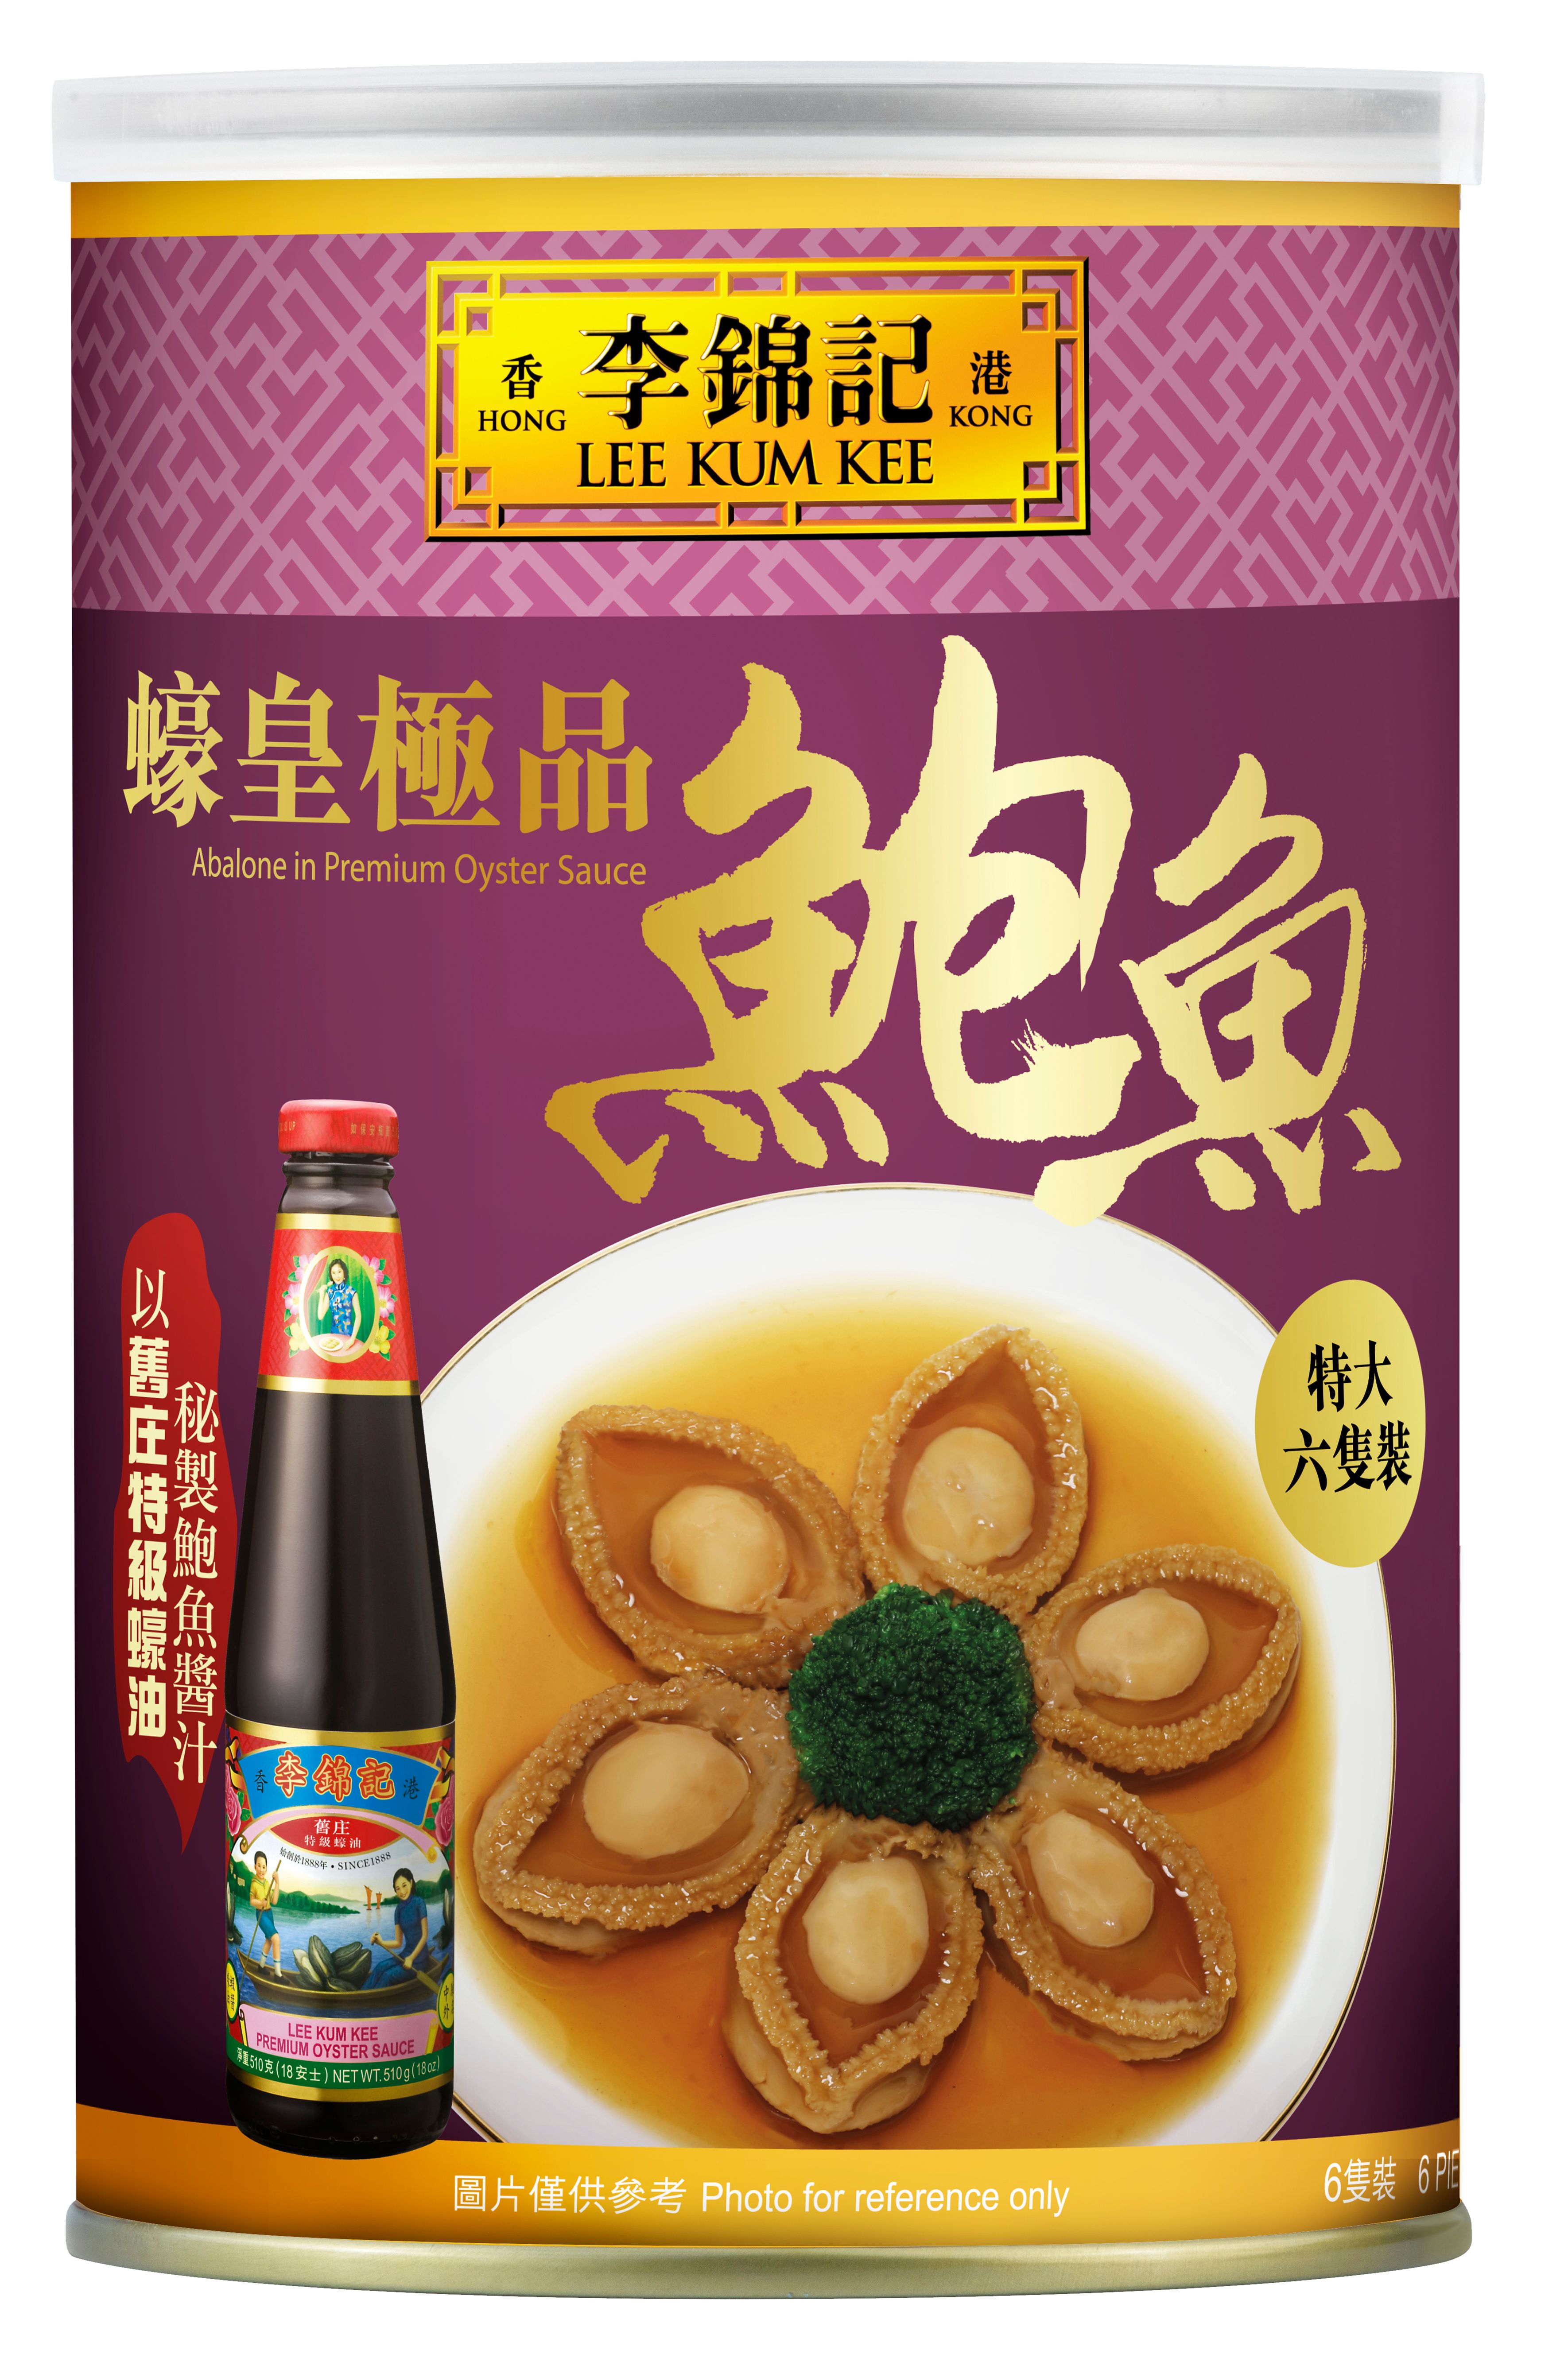 Lee Kum Kee Abalone Sauce